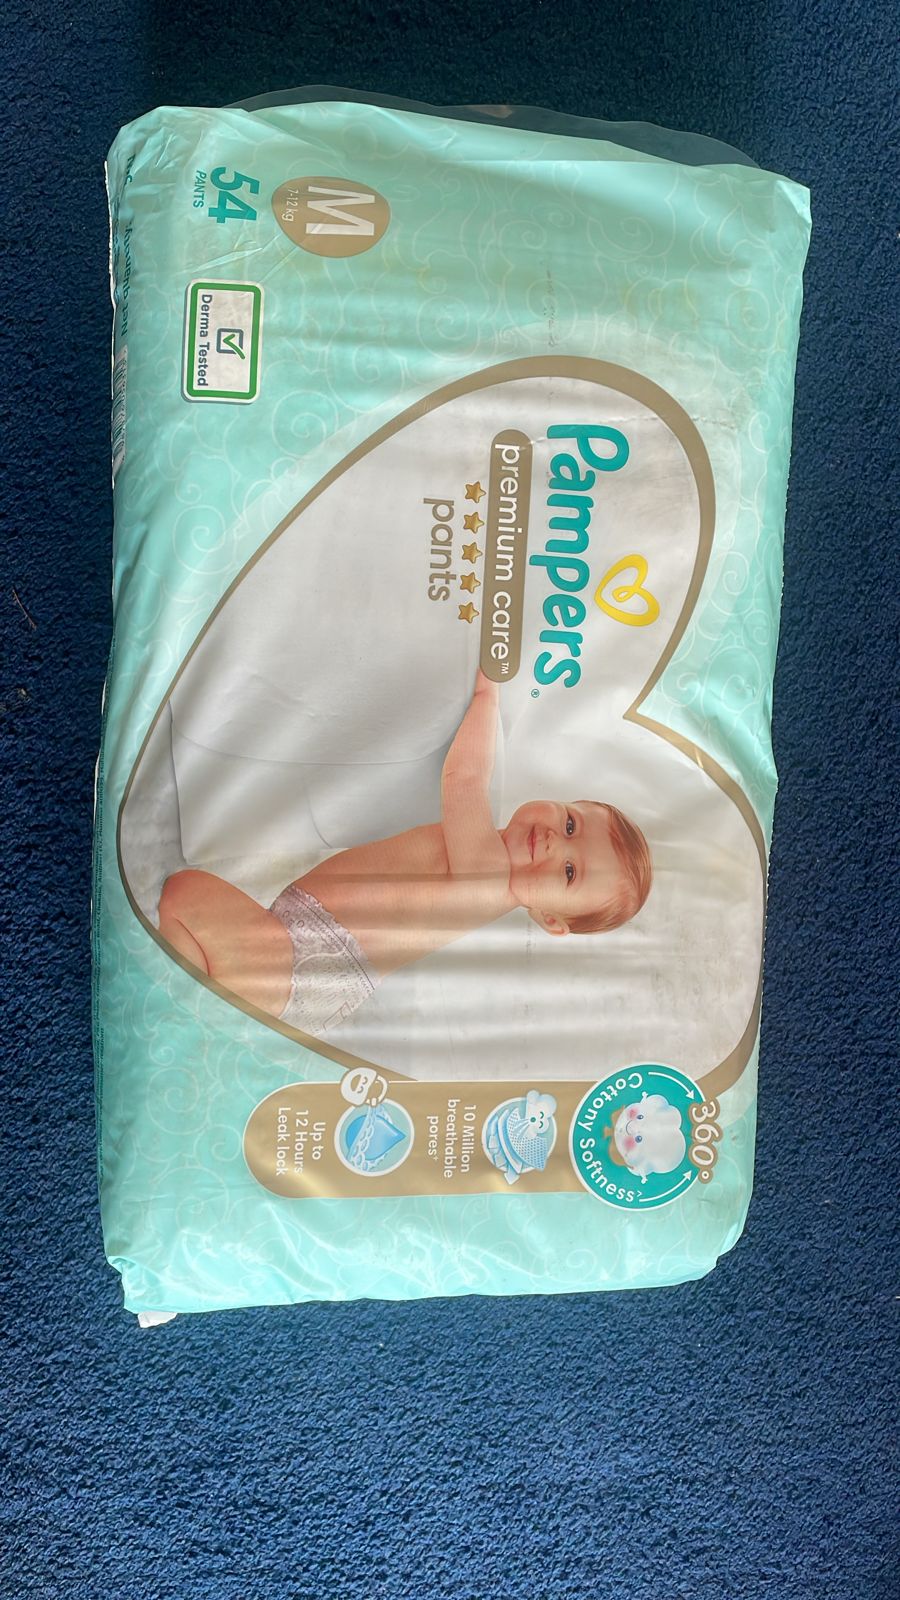 Pampers Premium Care Diaper Pants Large, 44 Count - MagicPills